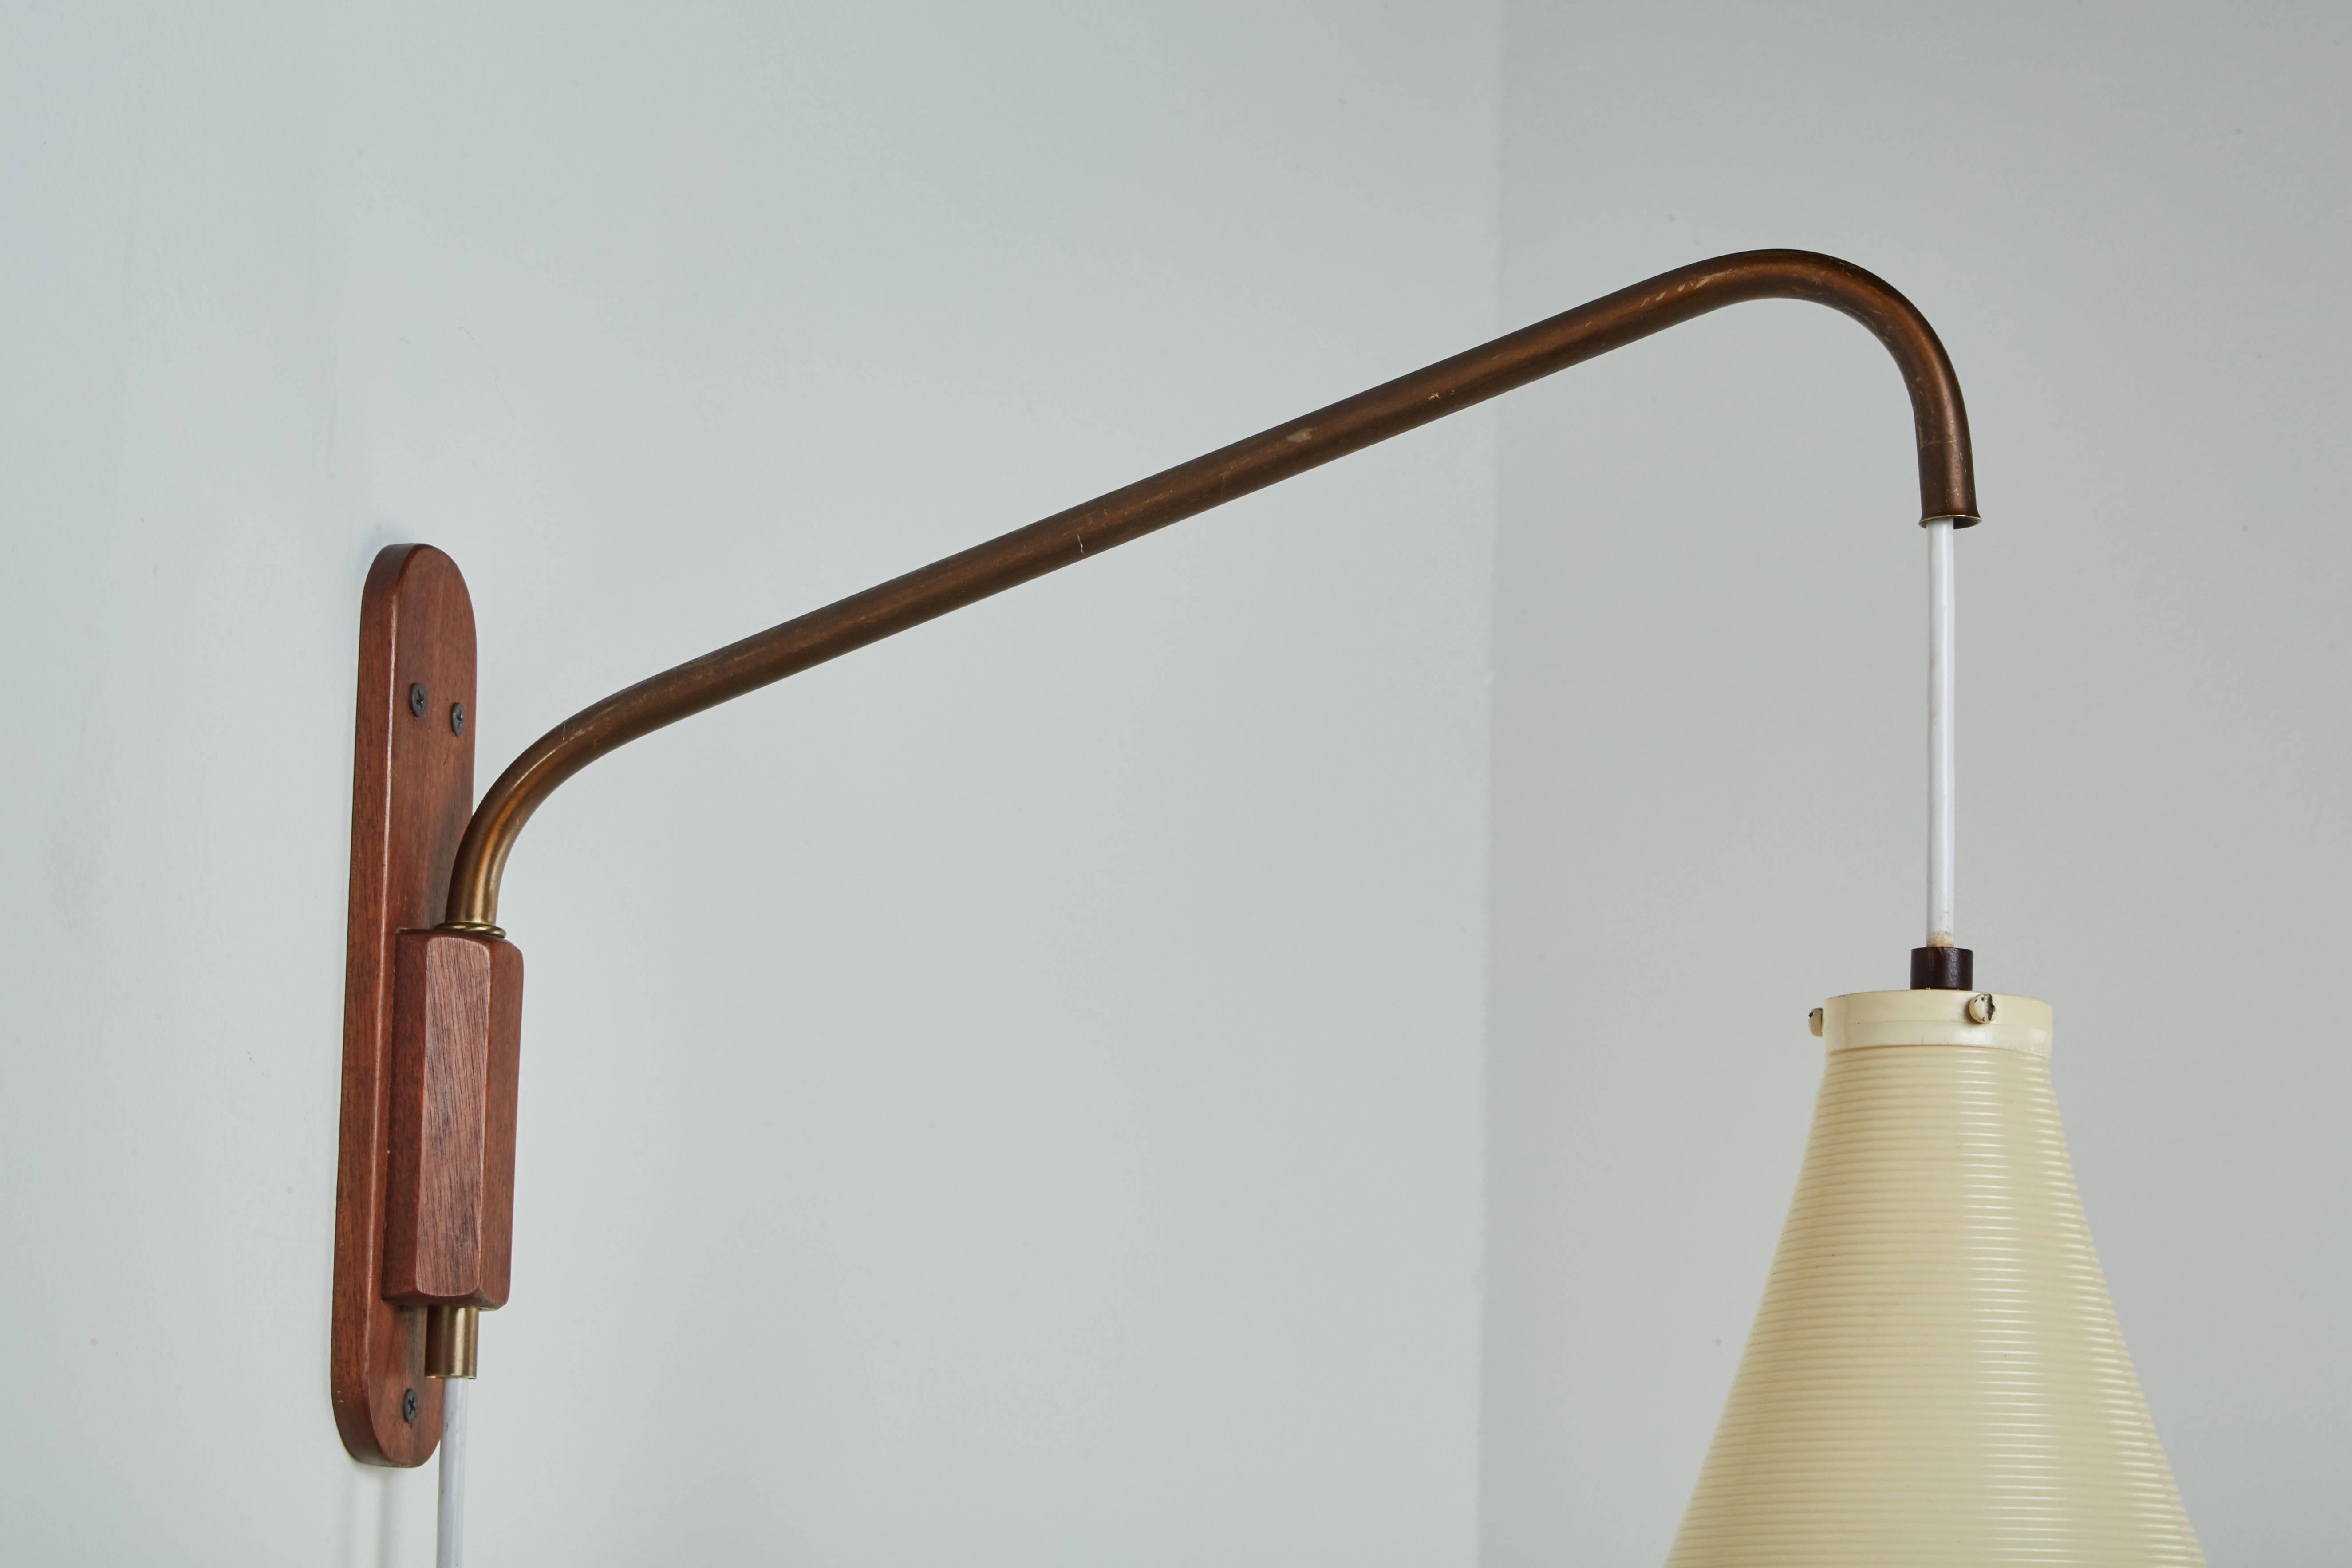 Wood Adjustable Wall Light by Heifetz Rotalflex